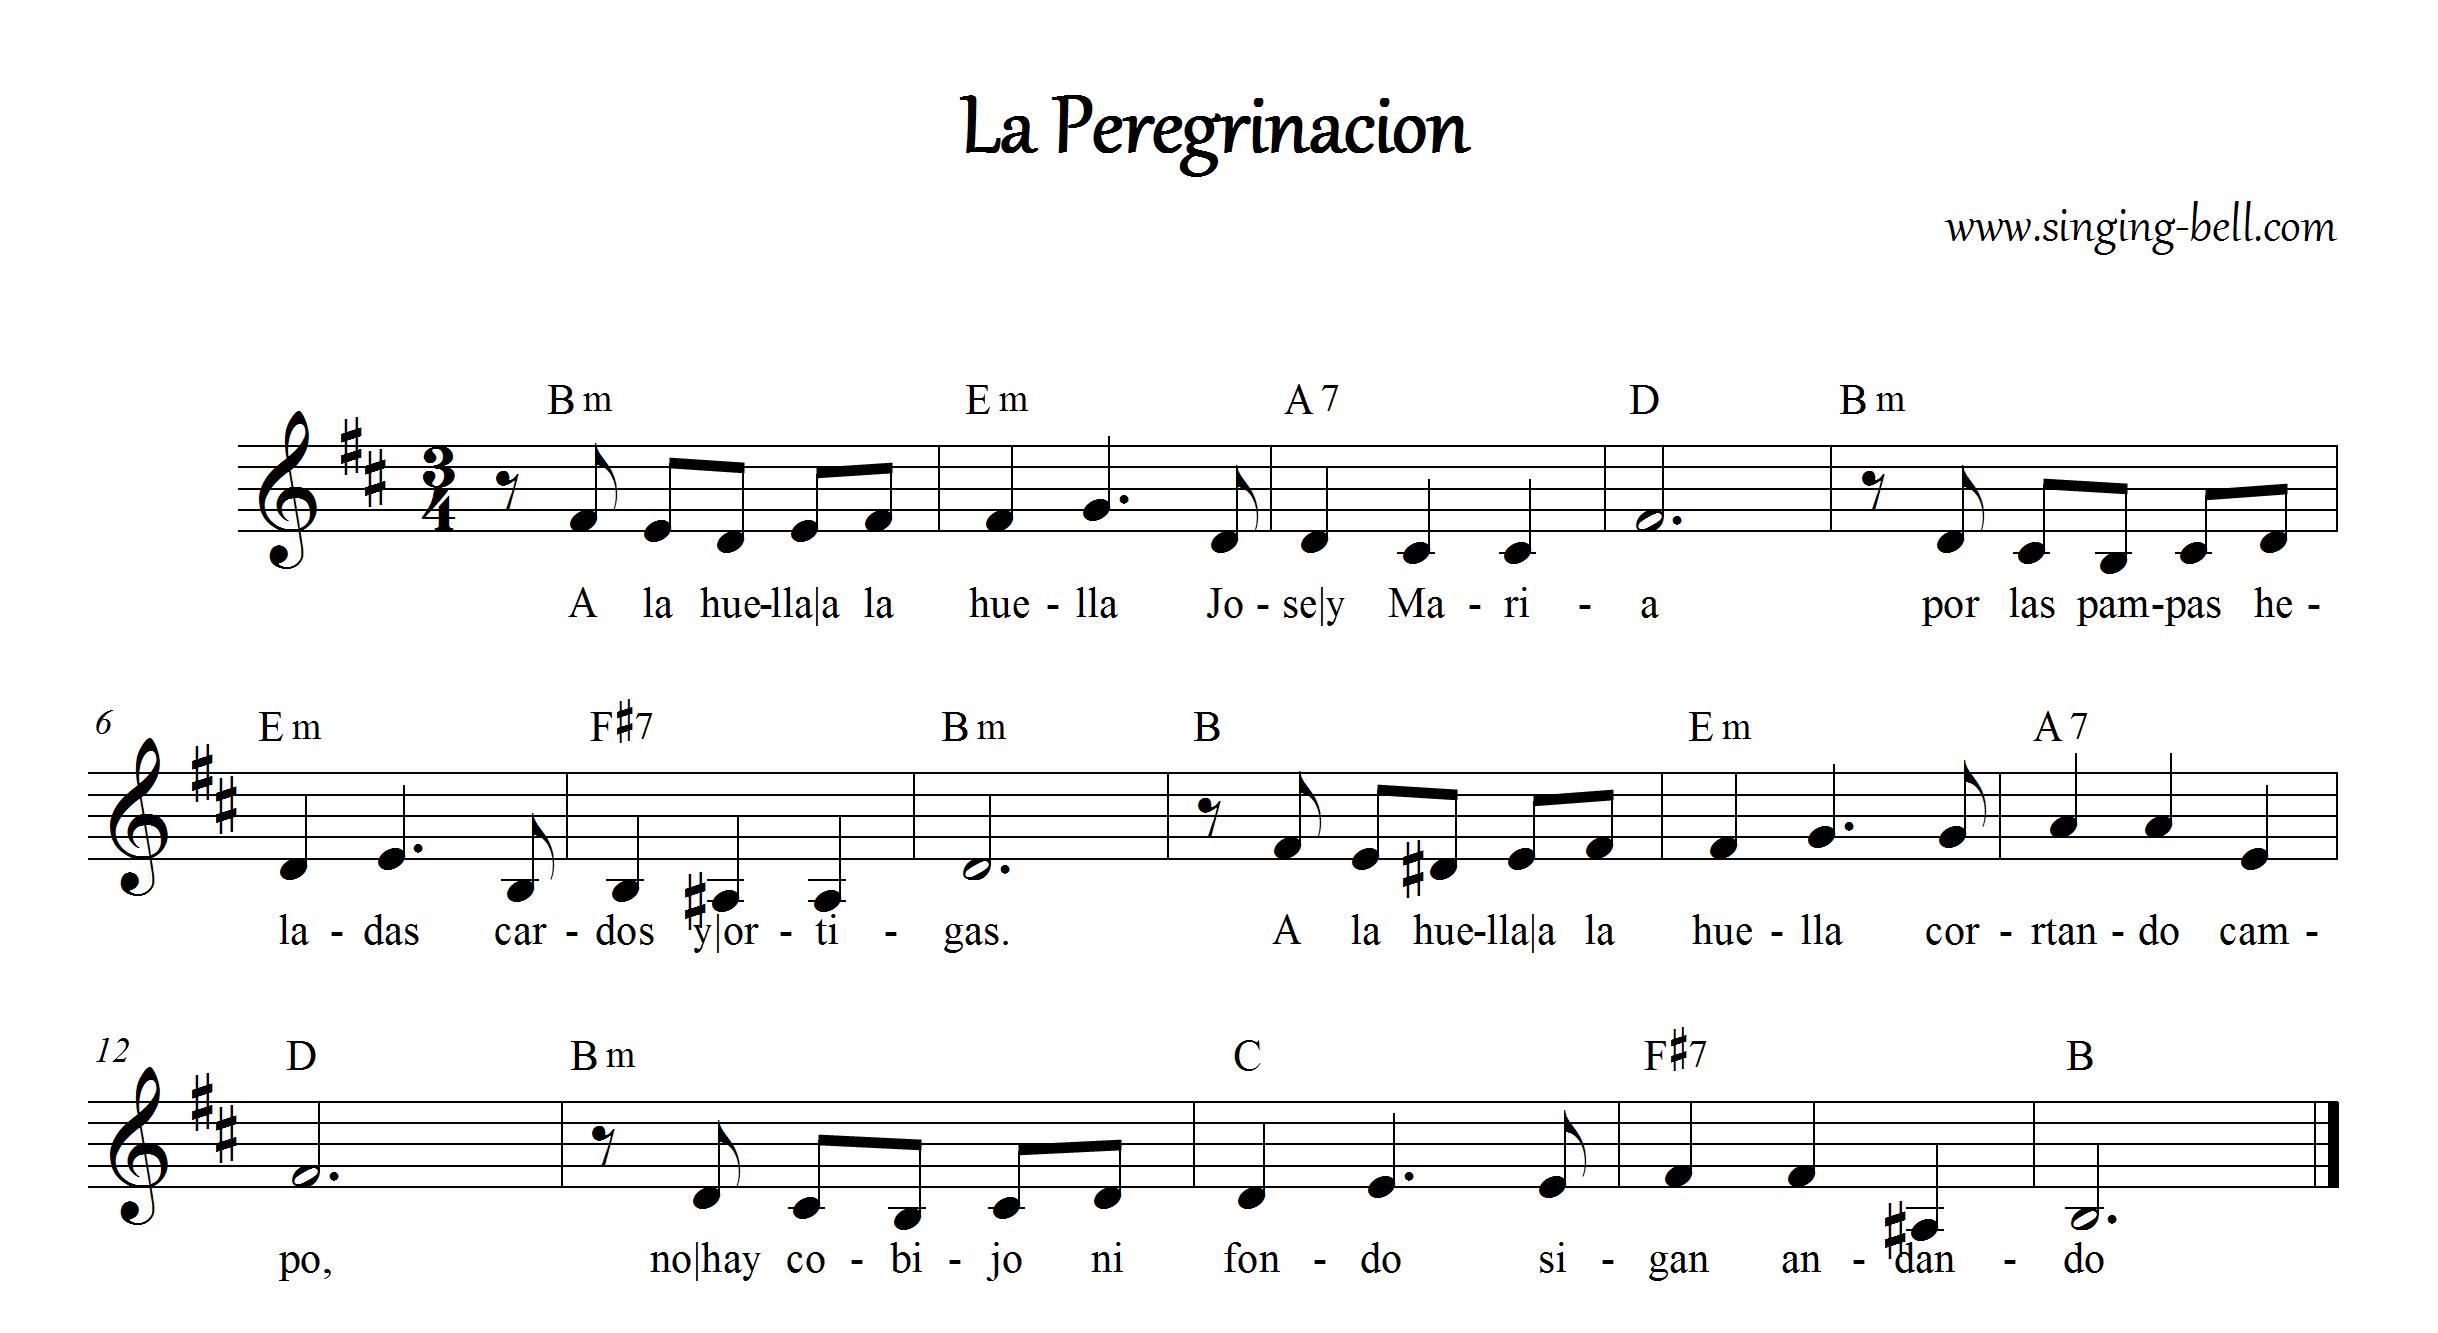 La Peregrinacion_Singing Bell